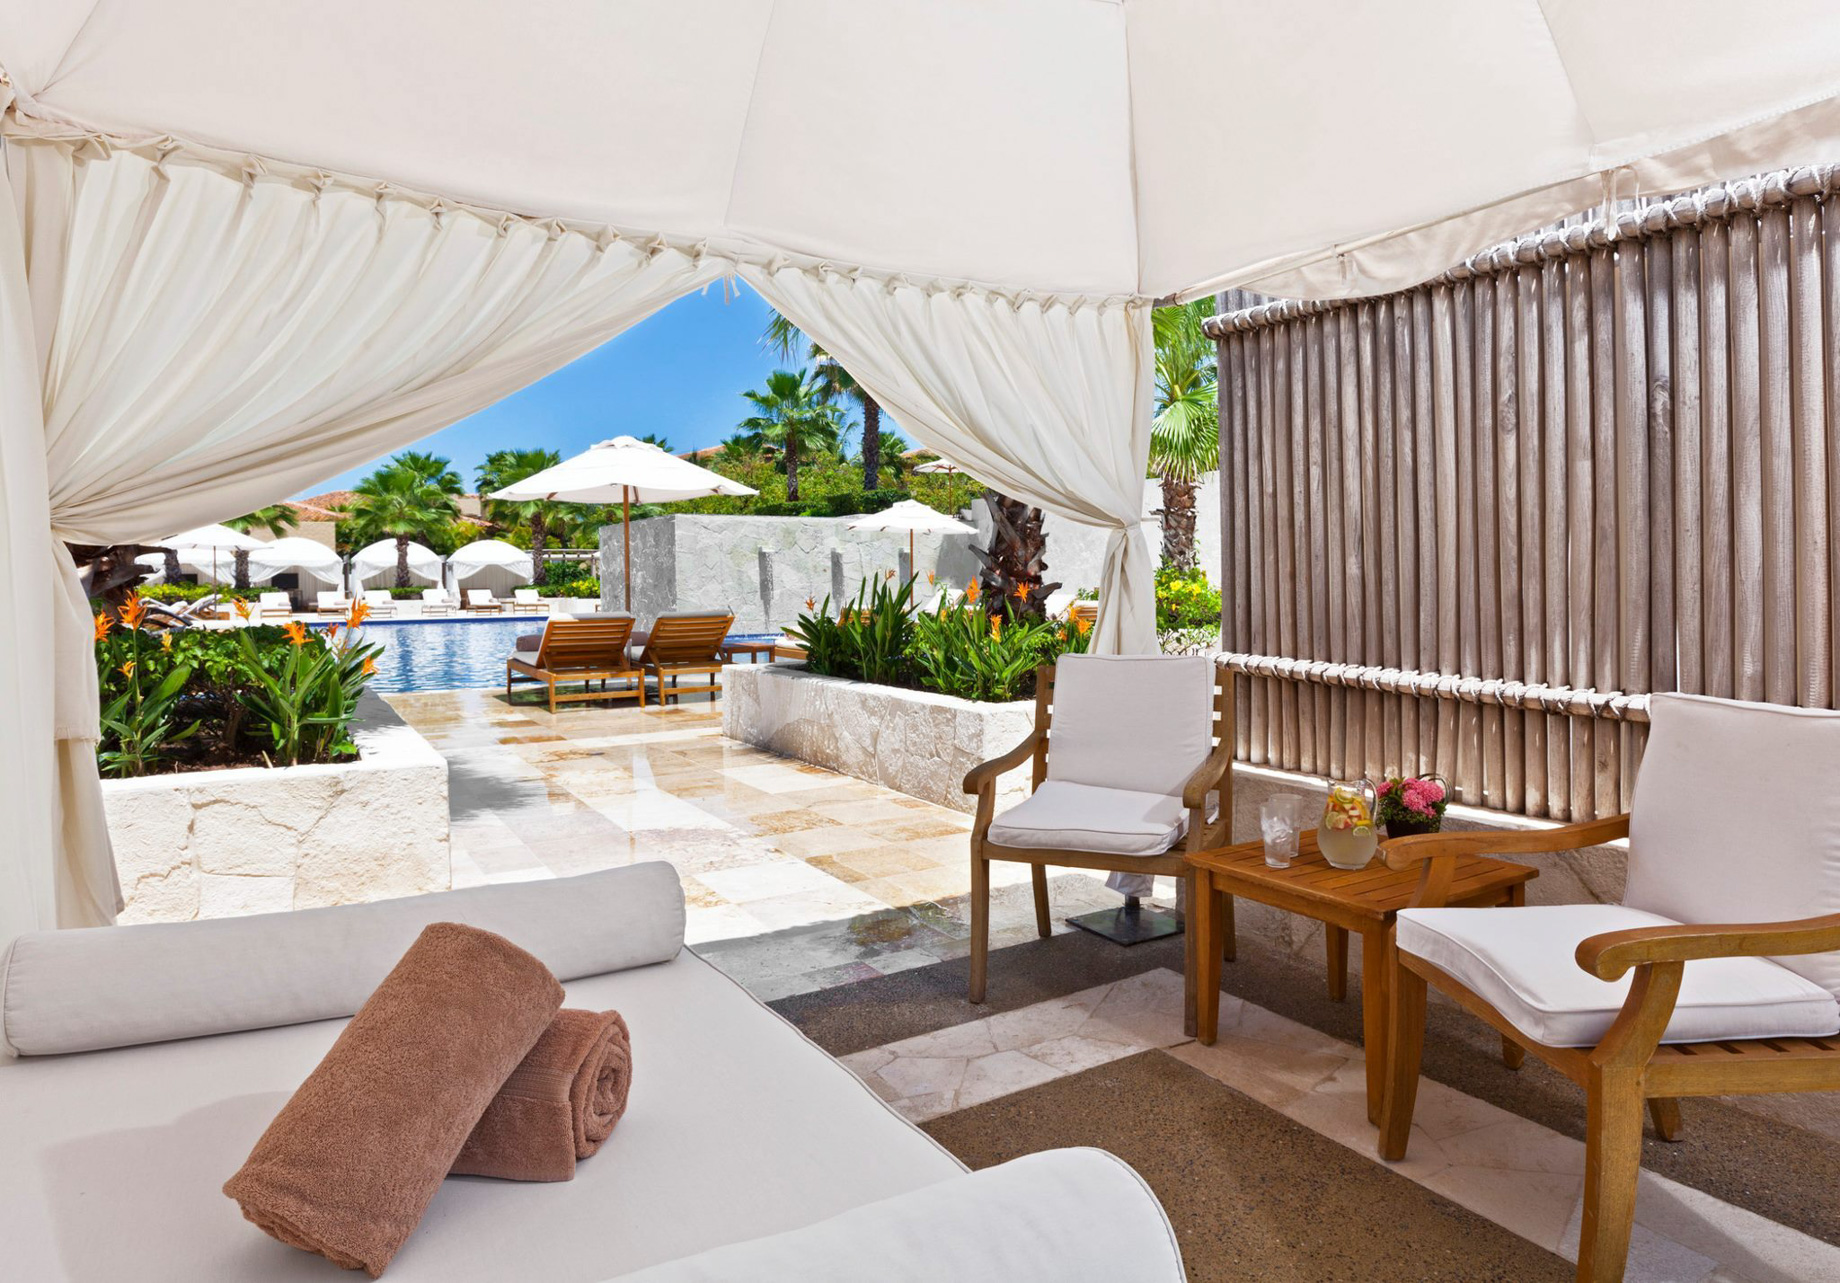 The St. Regis Punta Mita Resort – Nayarit, Mexico – Cabana Pool View